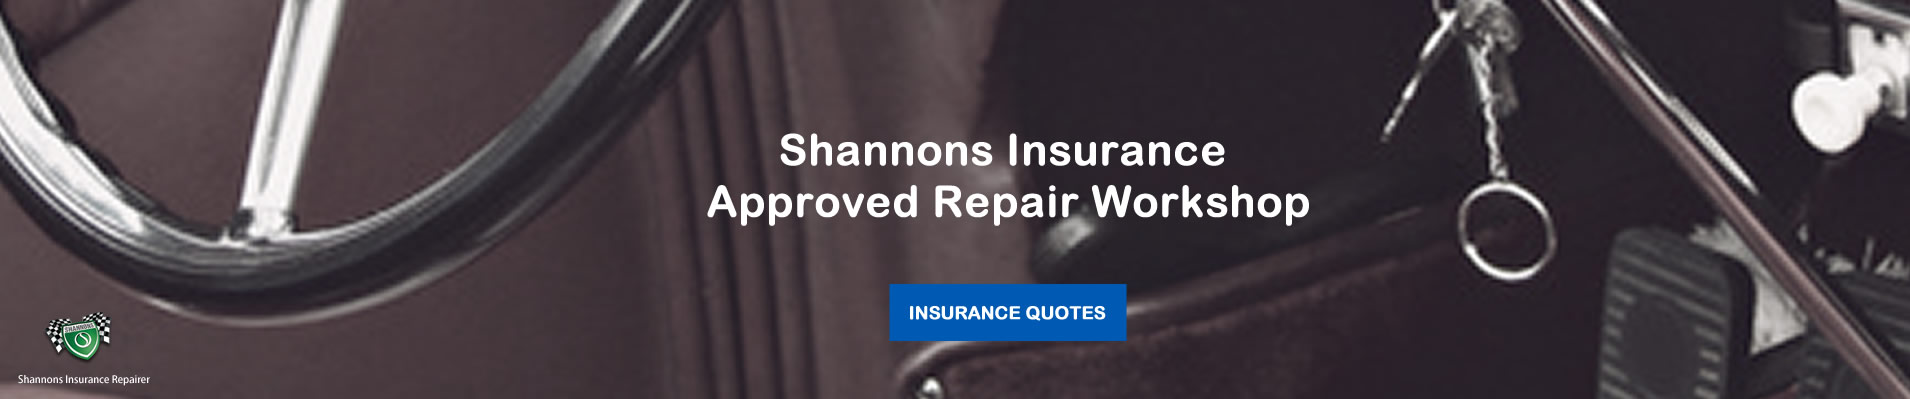 Shannons insurance approved repair workshop